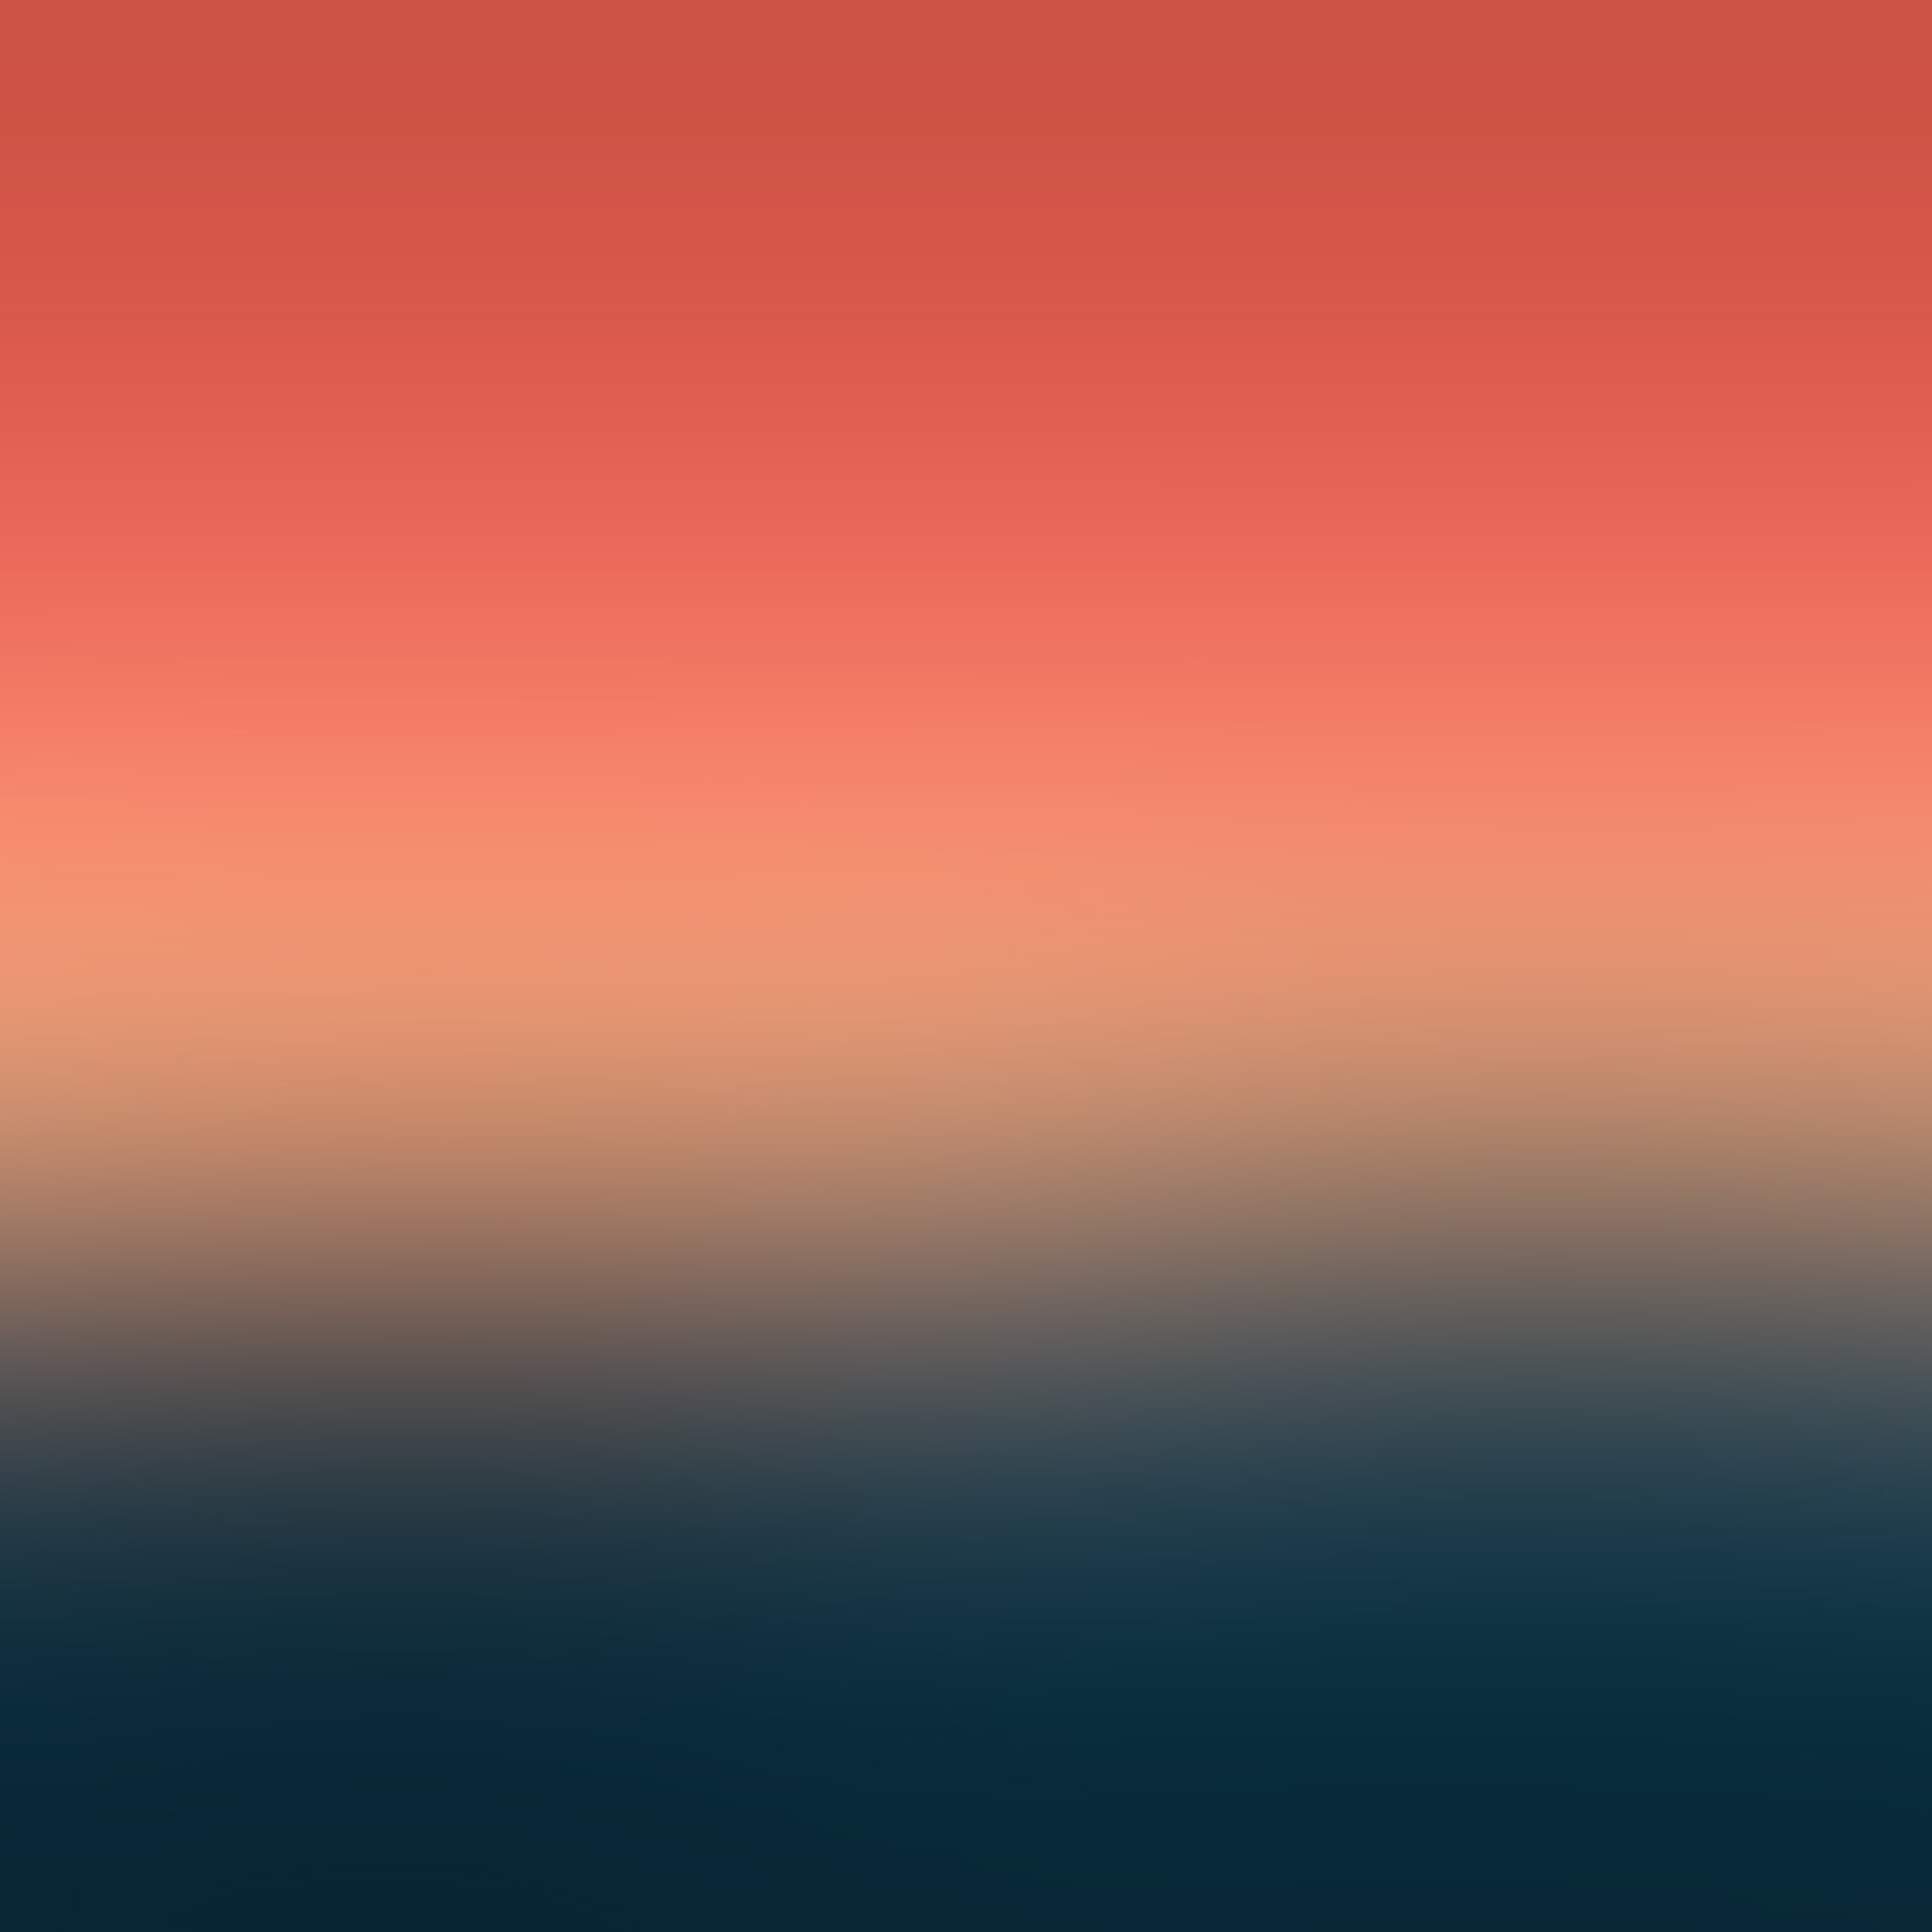 Red Blue Soft Morning Blur Wallpaper